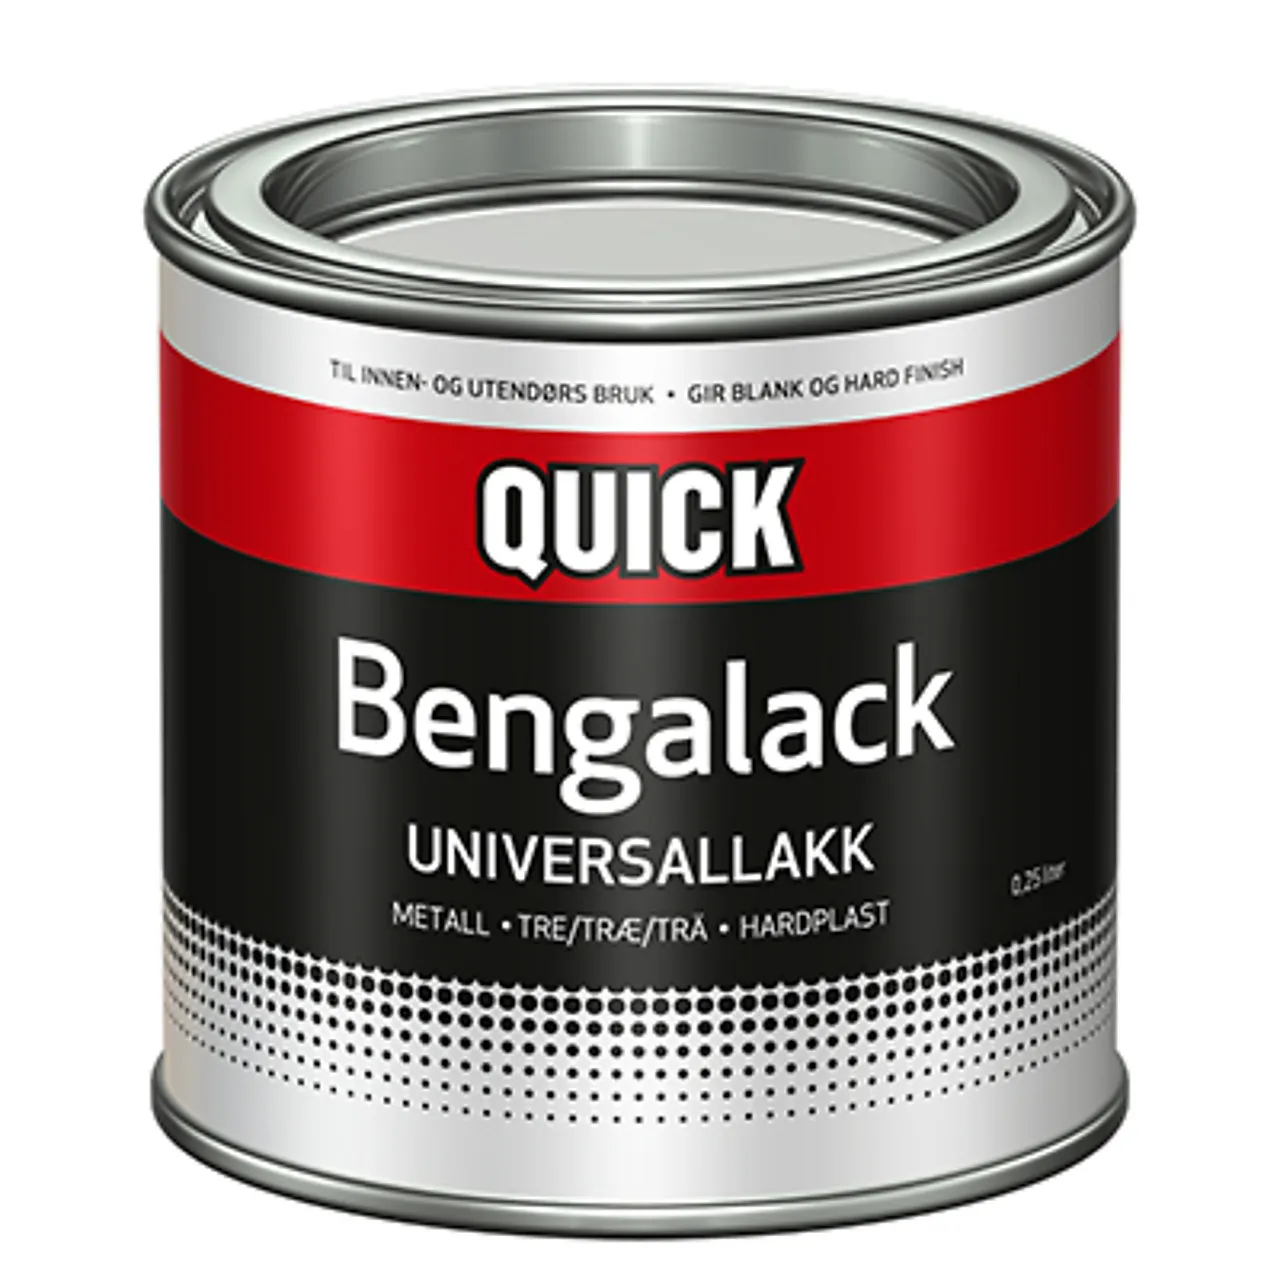 Bengalack universallakk nr 60 0,25 liter